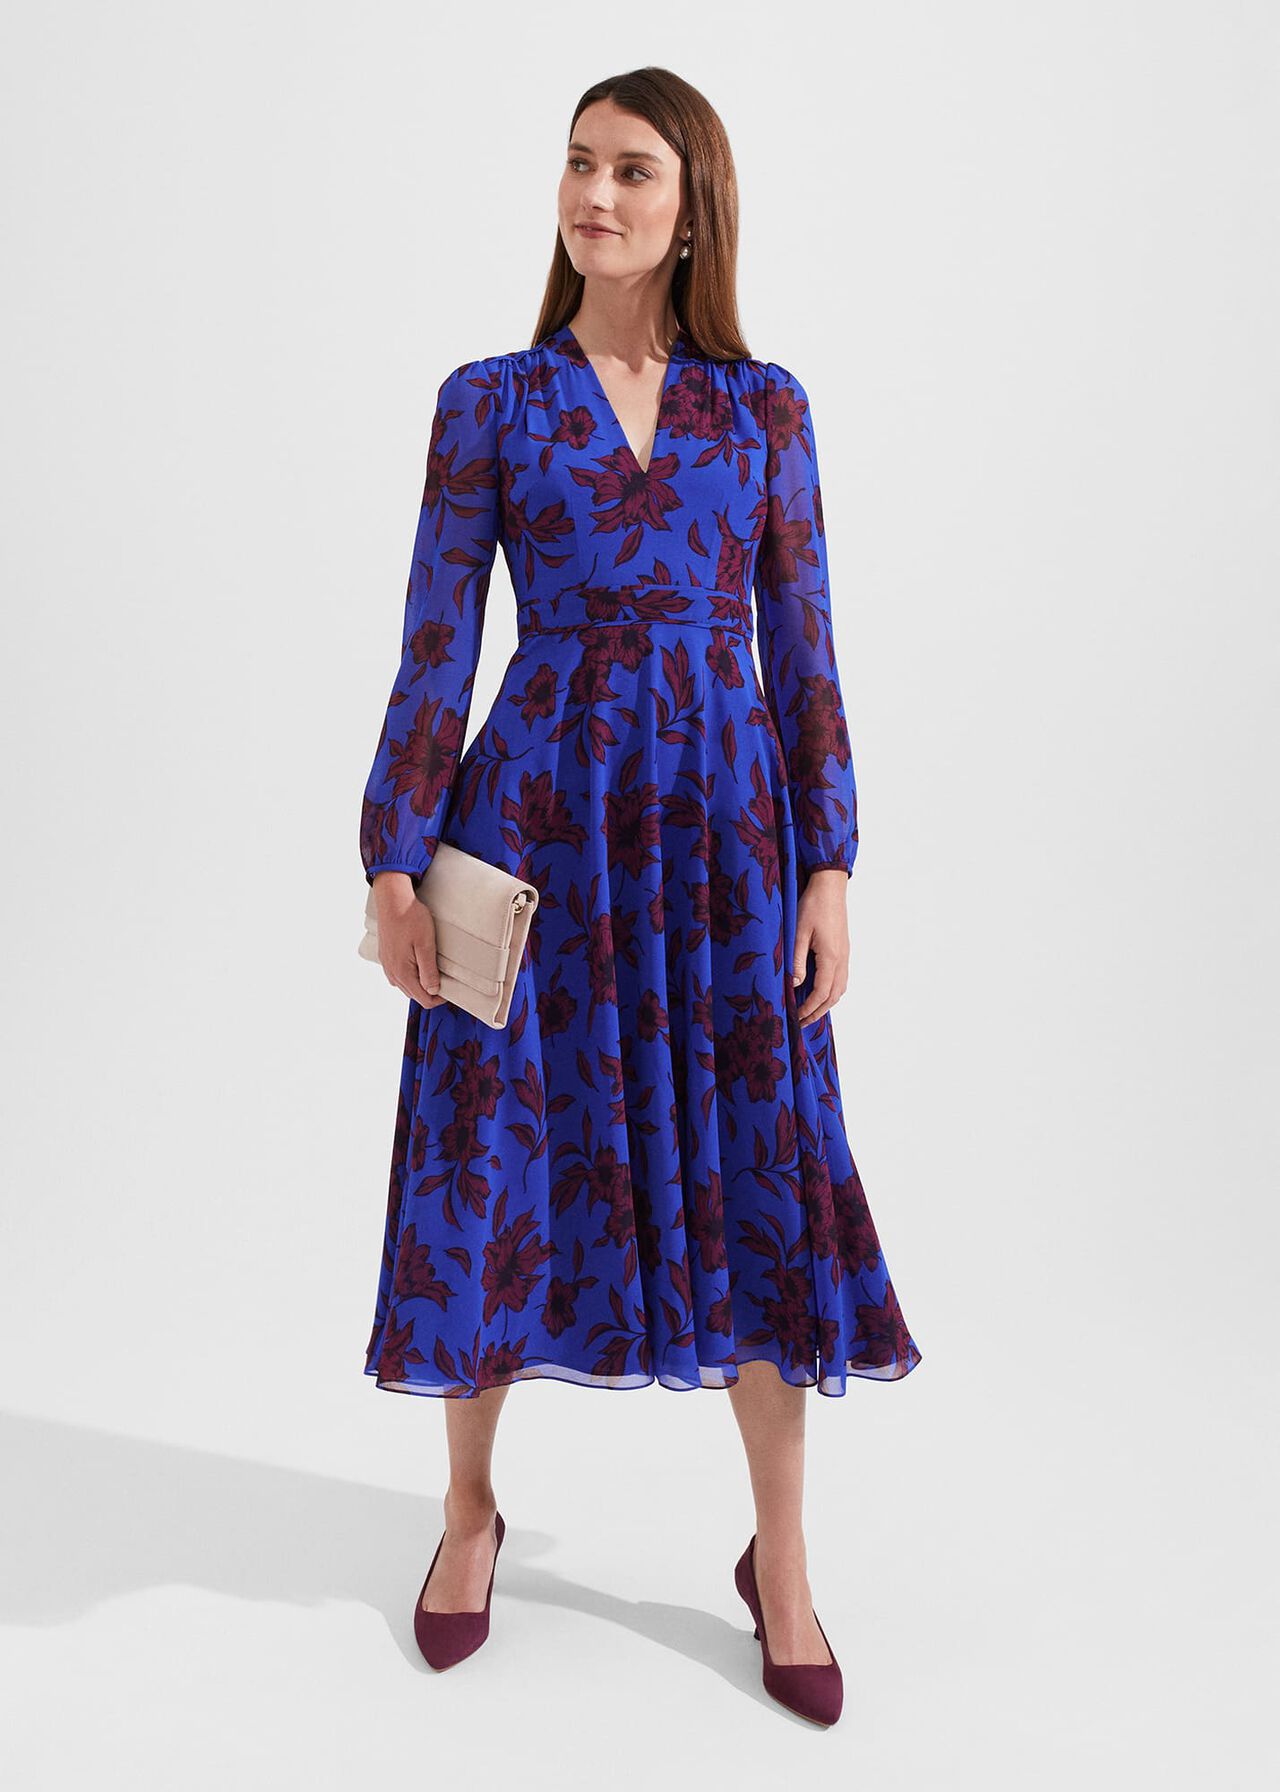 Petite Aurora Fit and Flare Printed Dress, Blue Burgundy, hi-res